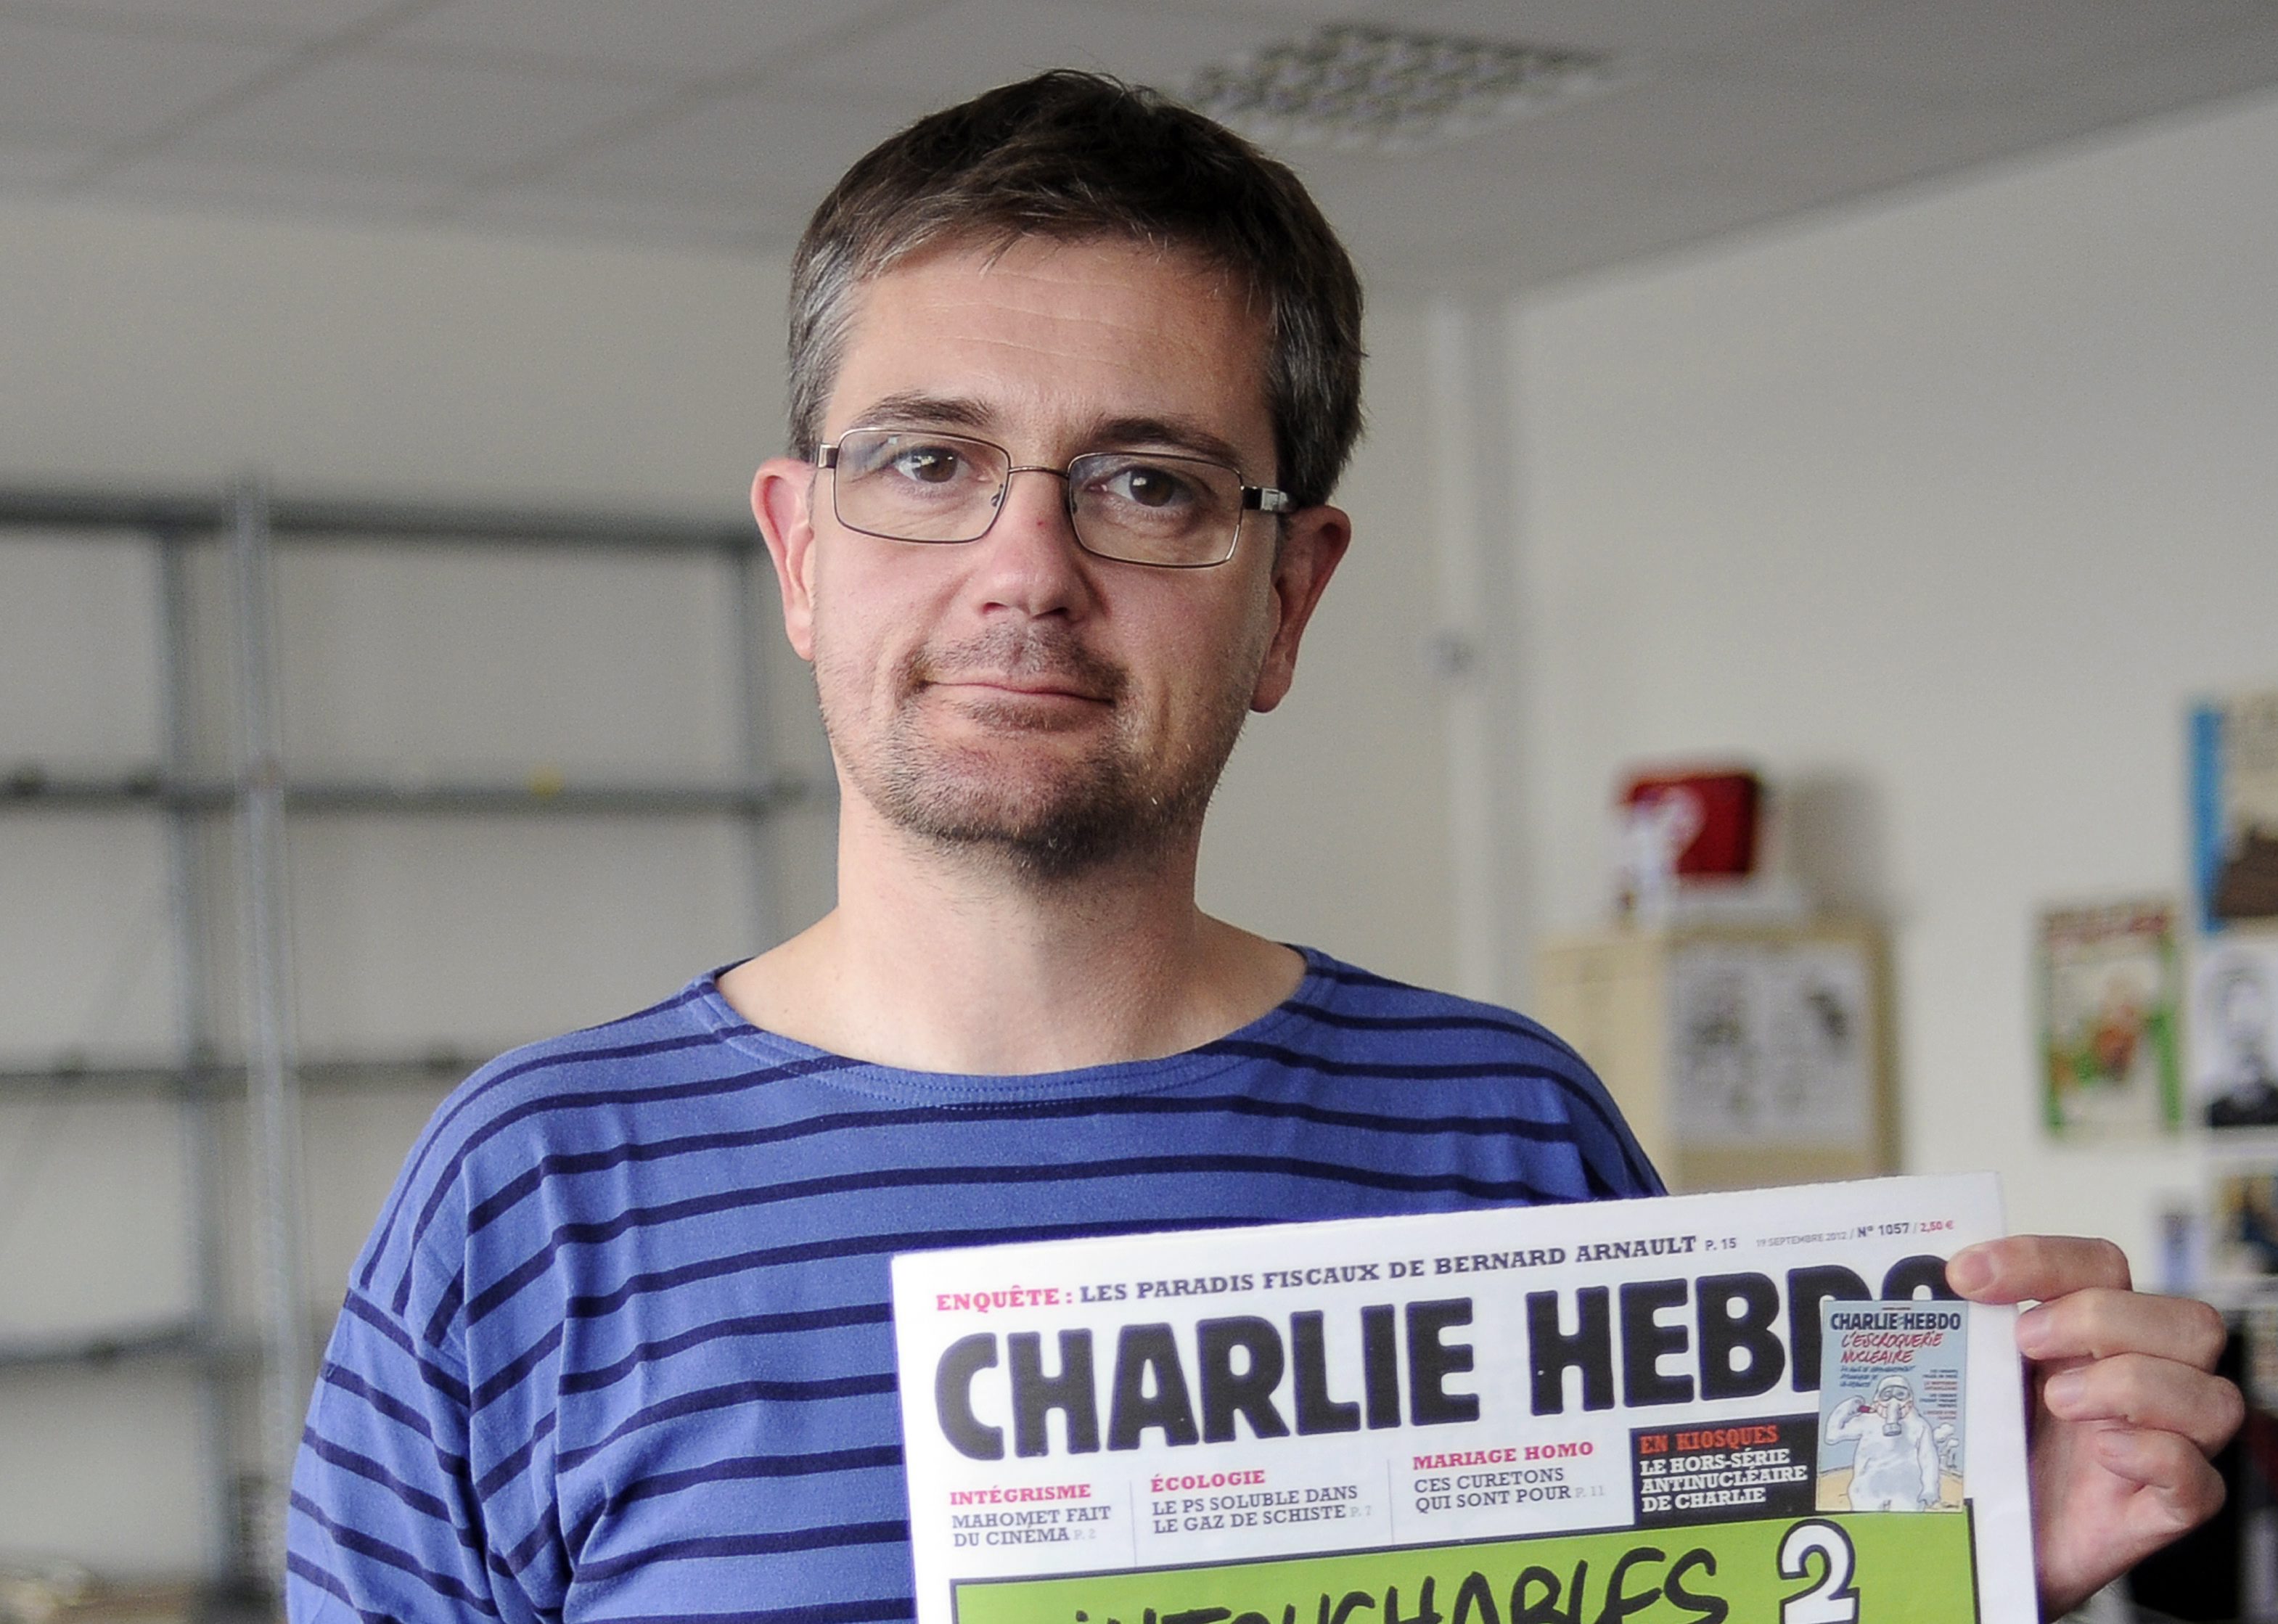 FT Deutschland: Στήριξη στο γαλλικό Charlie Hebdo για τα επίμαχα σκίτσα